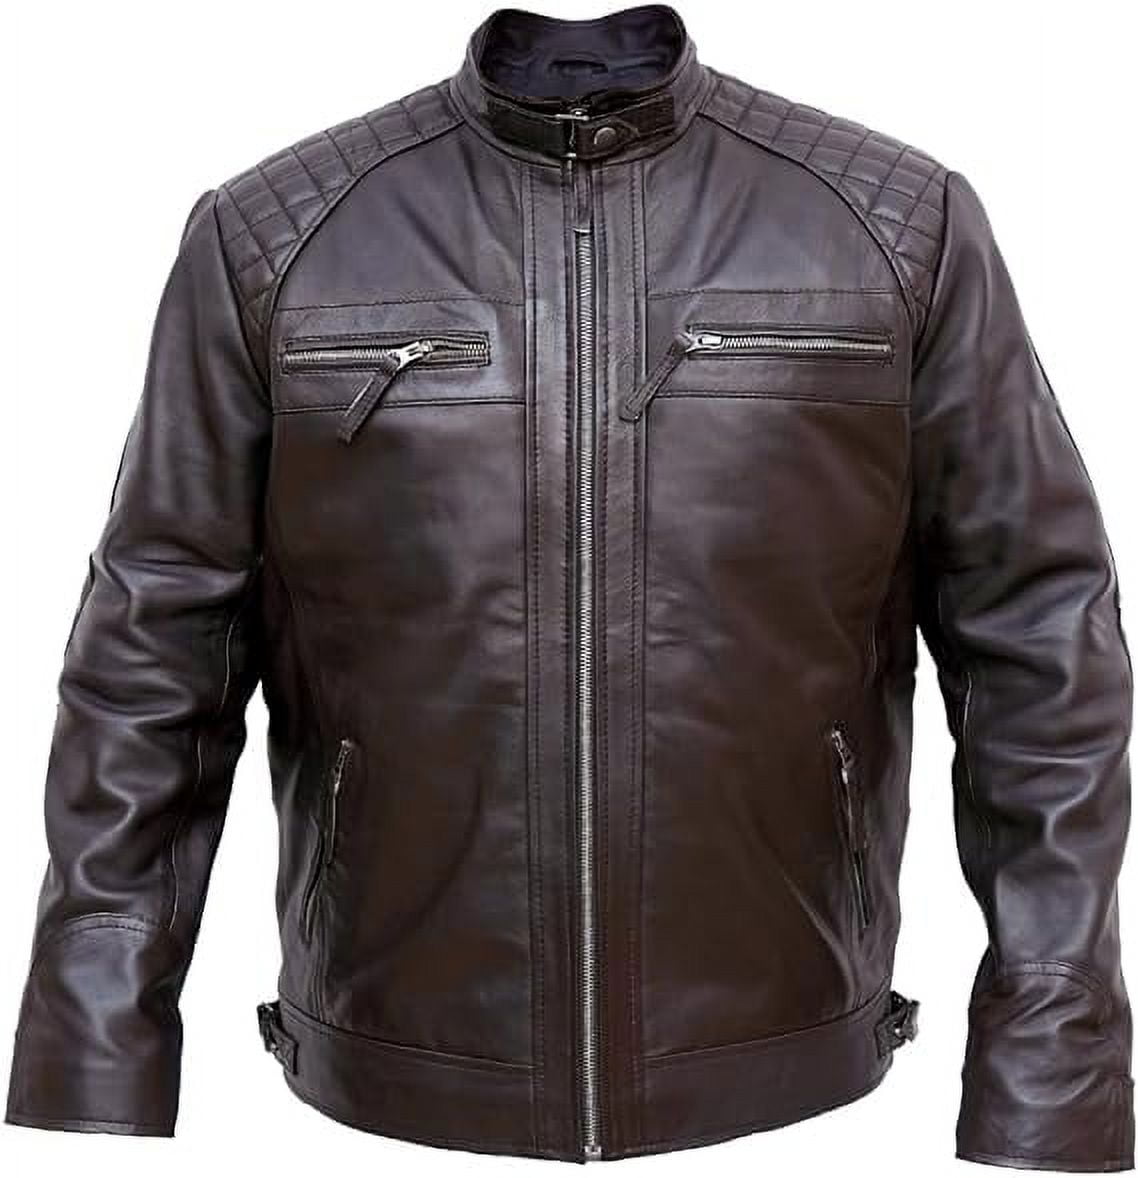 Teresa Genuine Leather Wrap Jacket by Badgley Mischka-thanhphatduhoc.com.vn